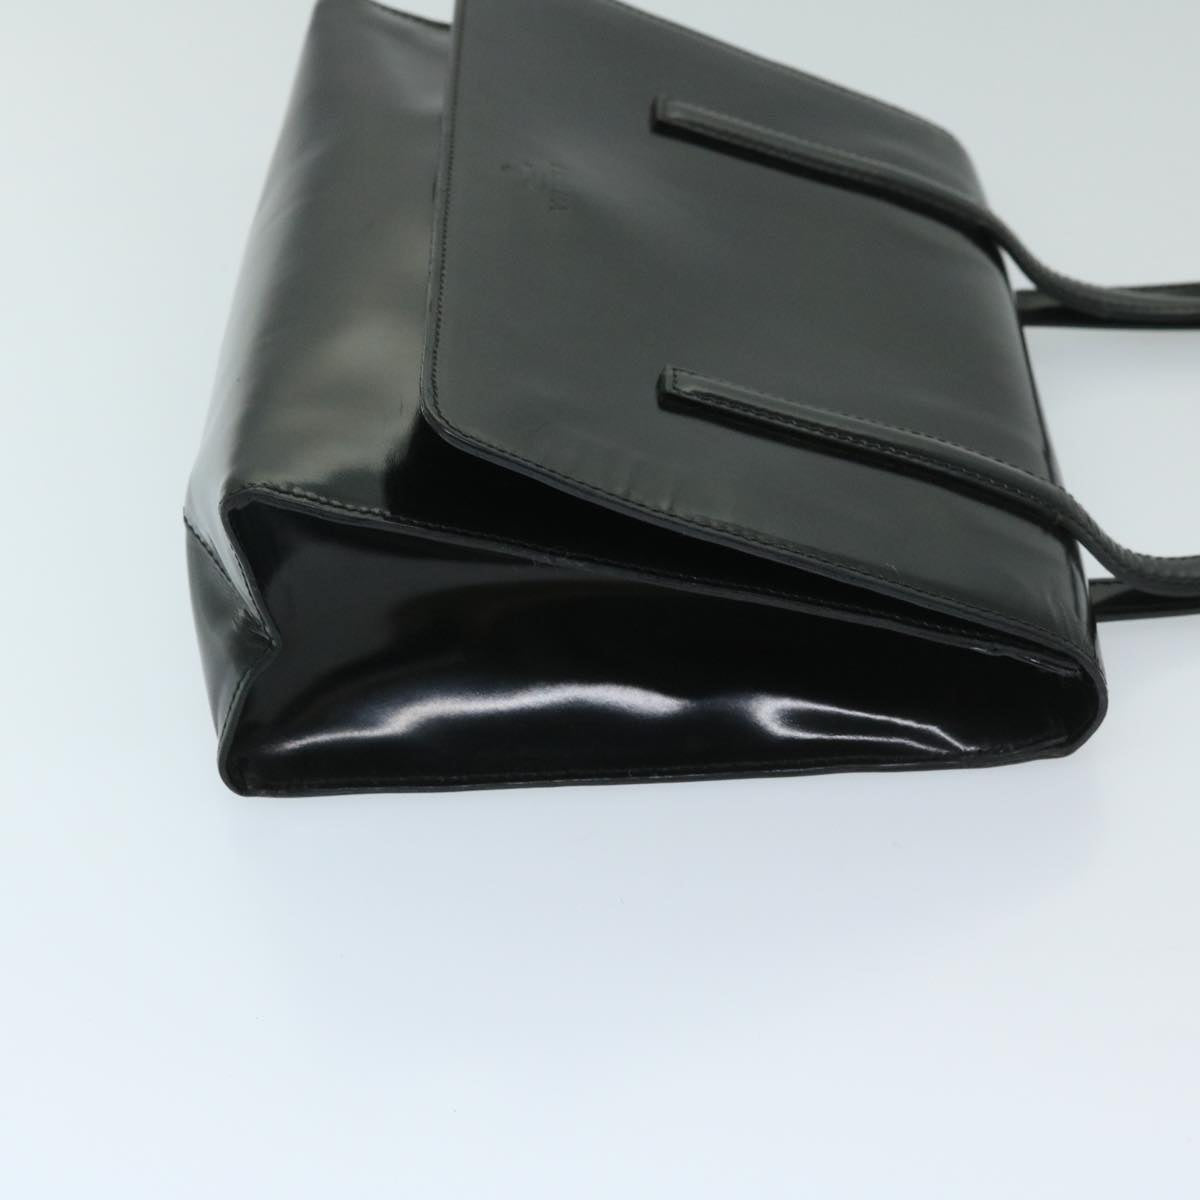 PRADA Hand Bag Patent leather Black Auth bs12915